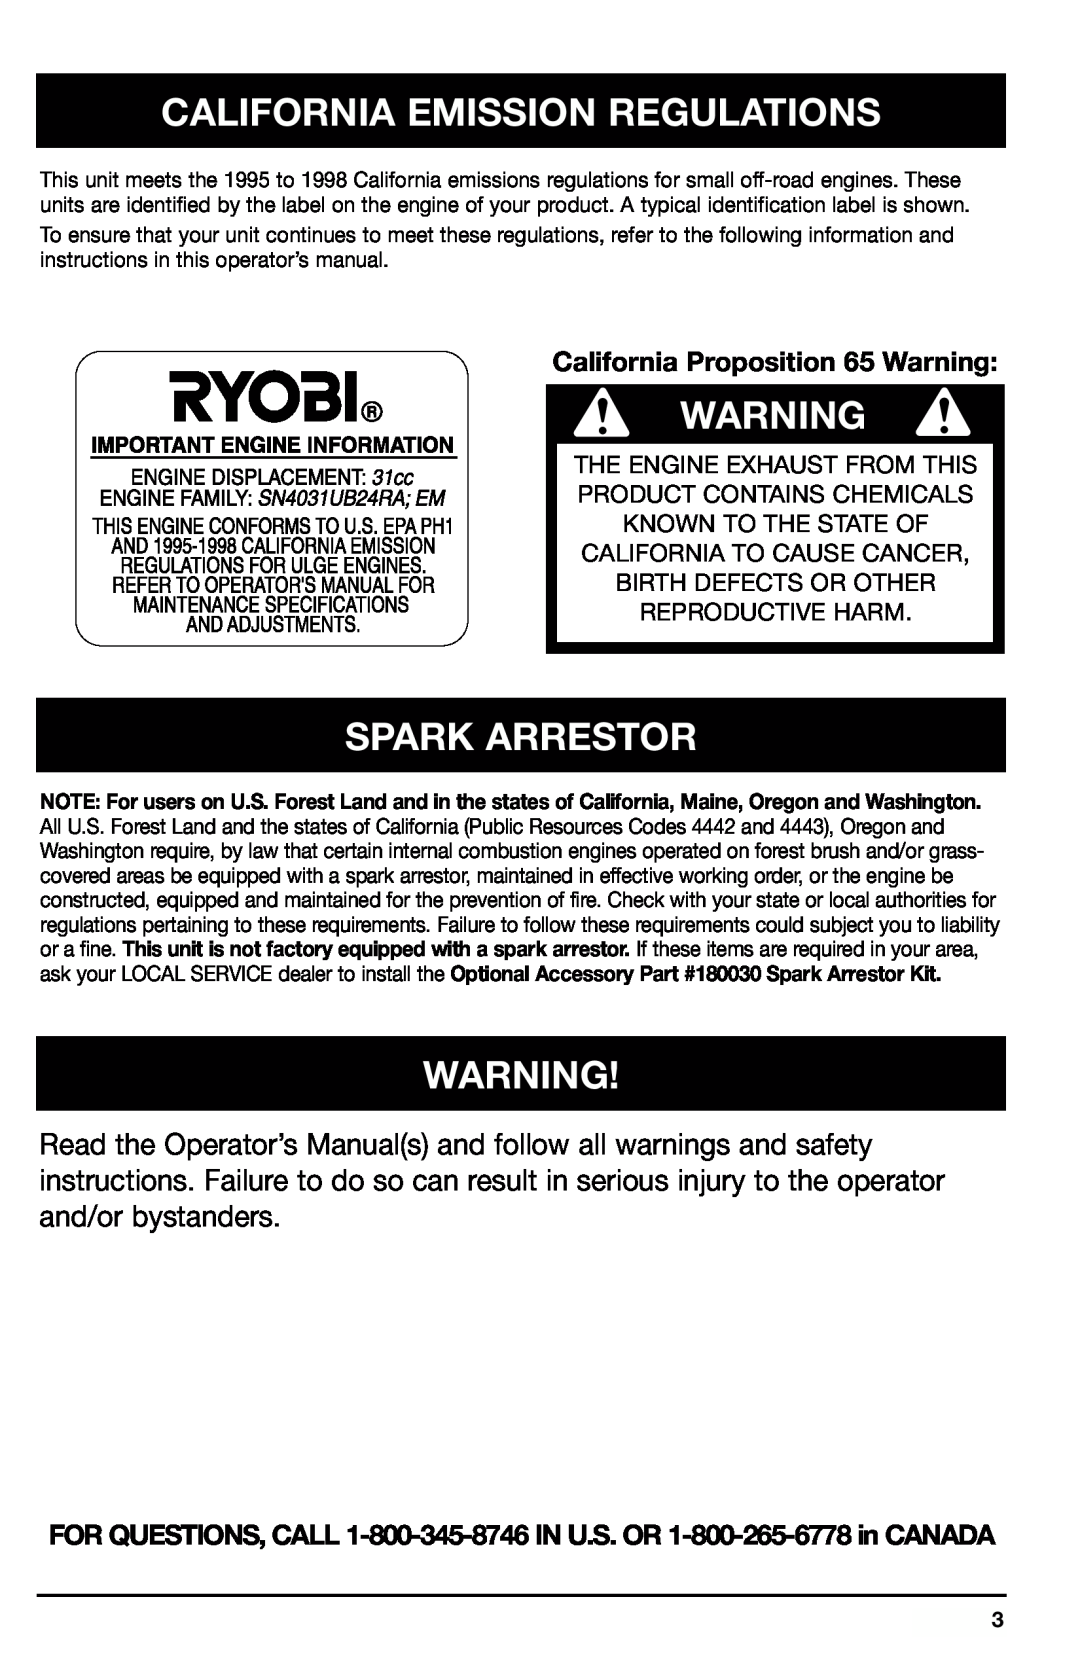 Ryobi 780r California Emission Regulations, Spark Arrestor, California Proposition 65 Warning, California To Cause Cancer 